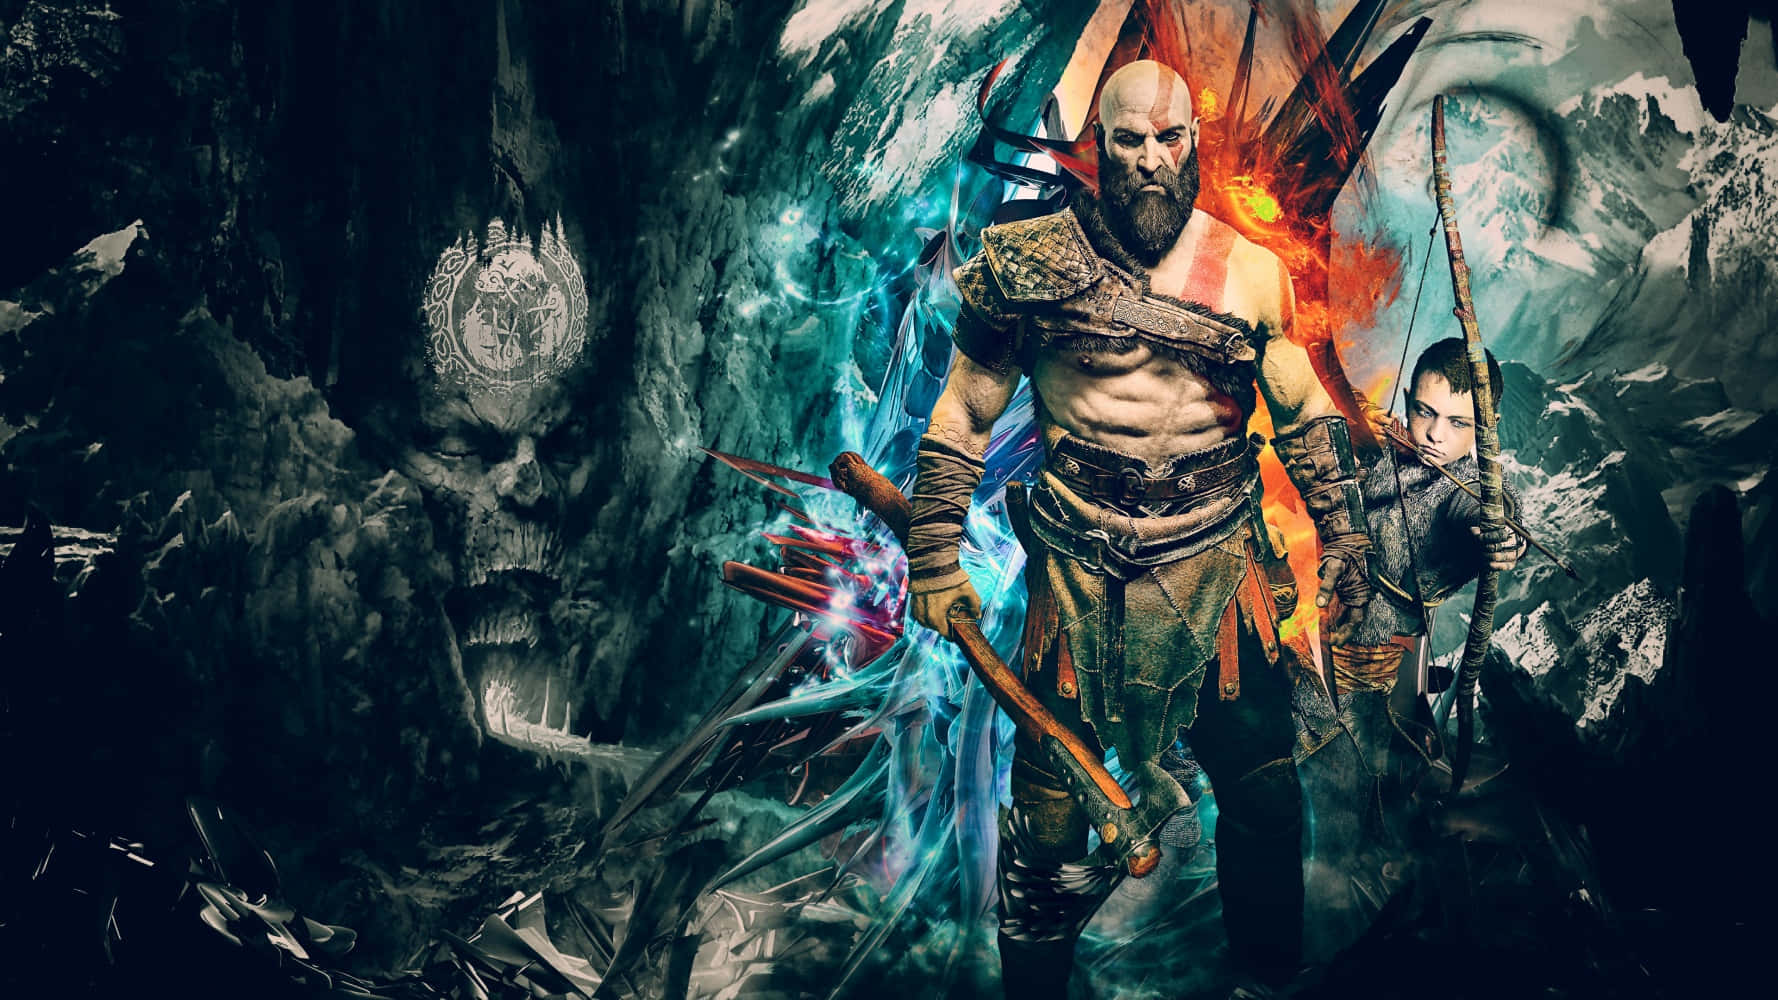 Kratos and Atreus charging into battle in God of War Wallpaper